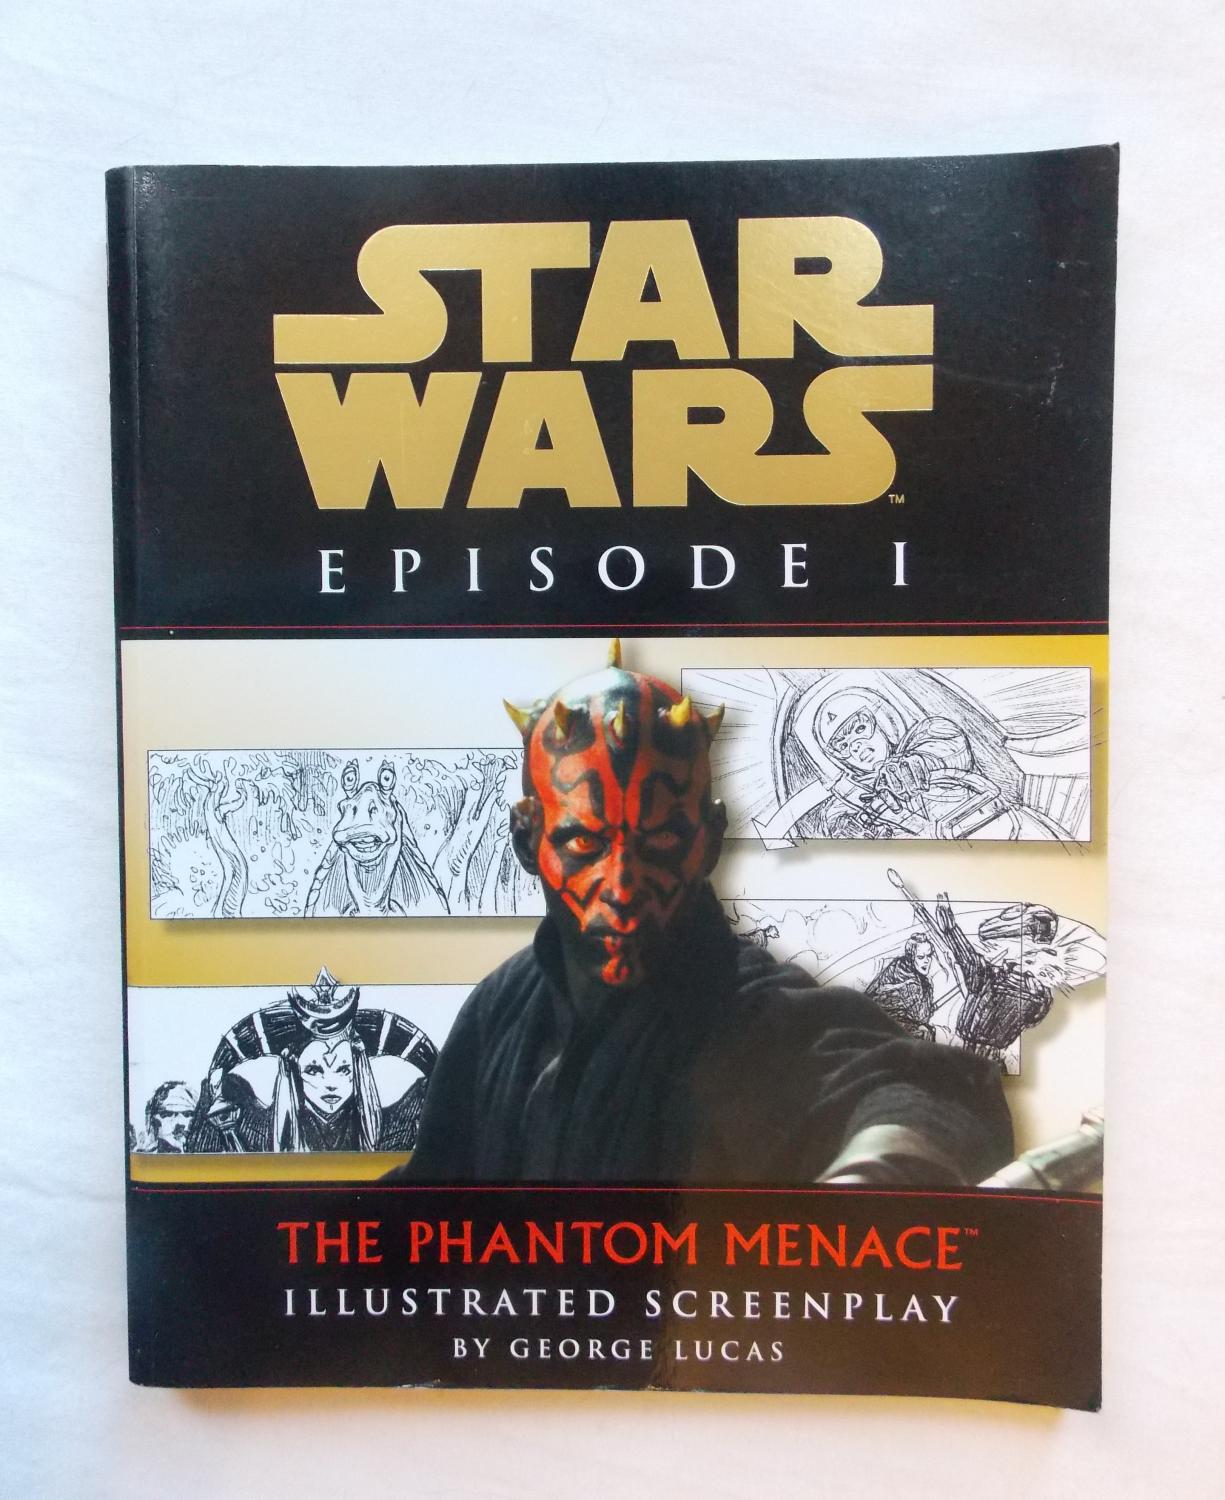 star wars episode 1 the phantom menace illustrated screenplay